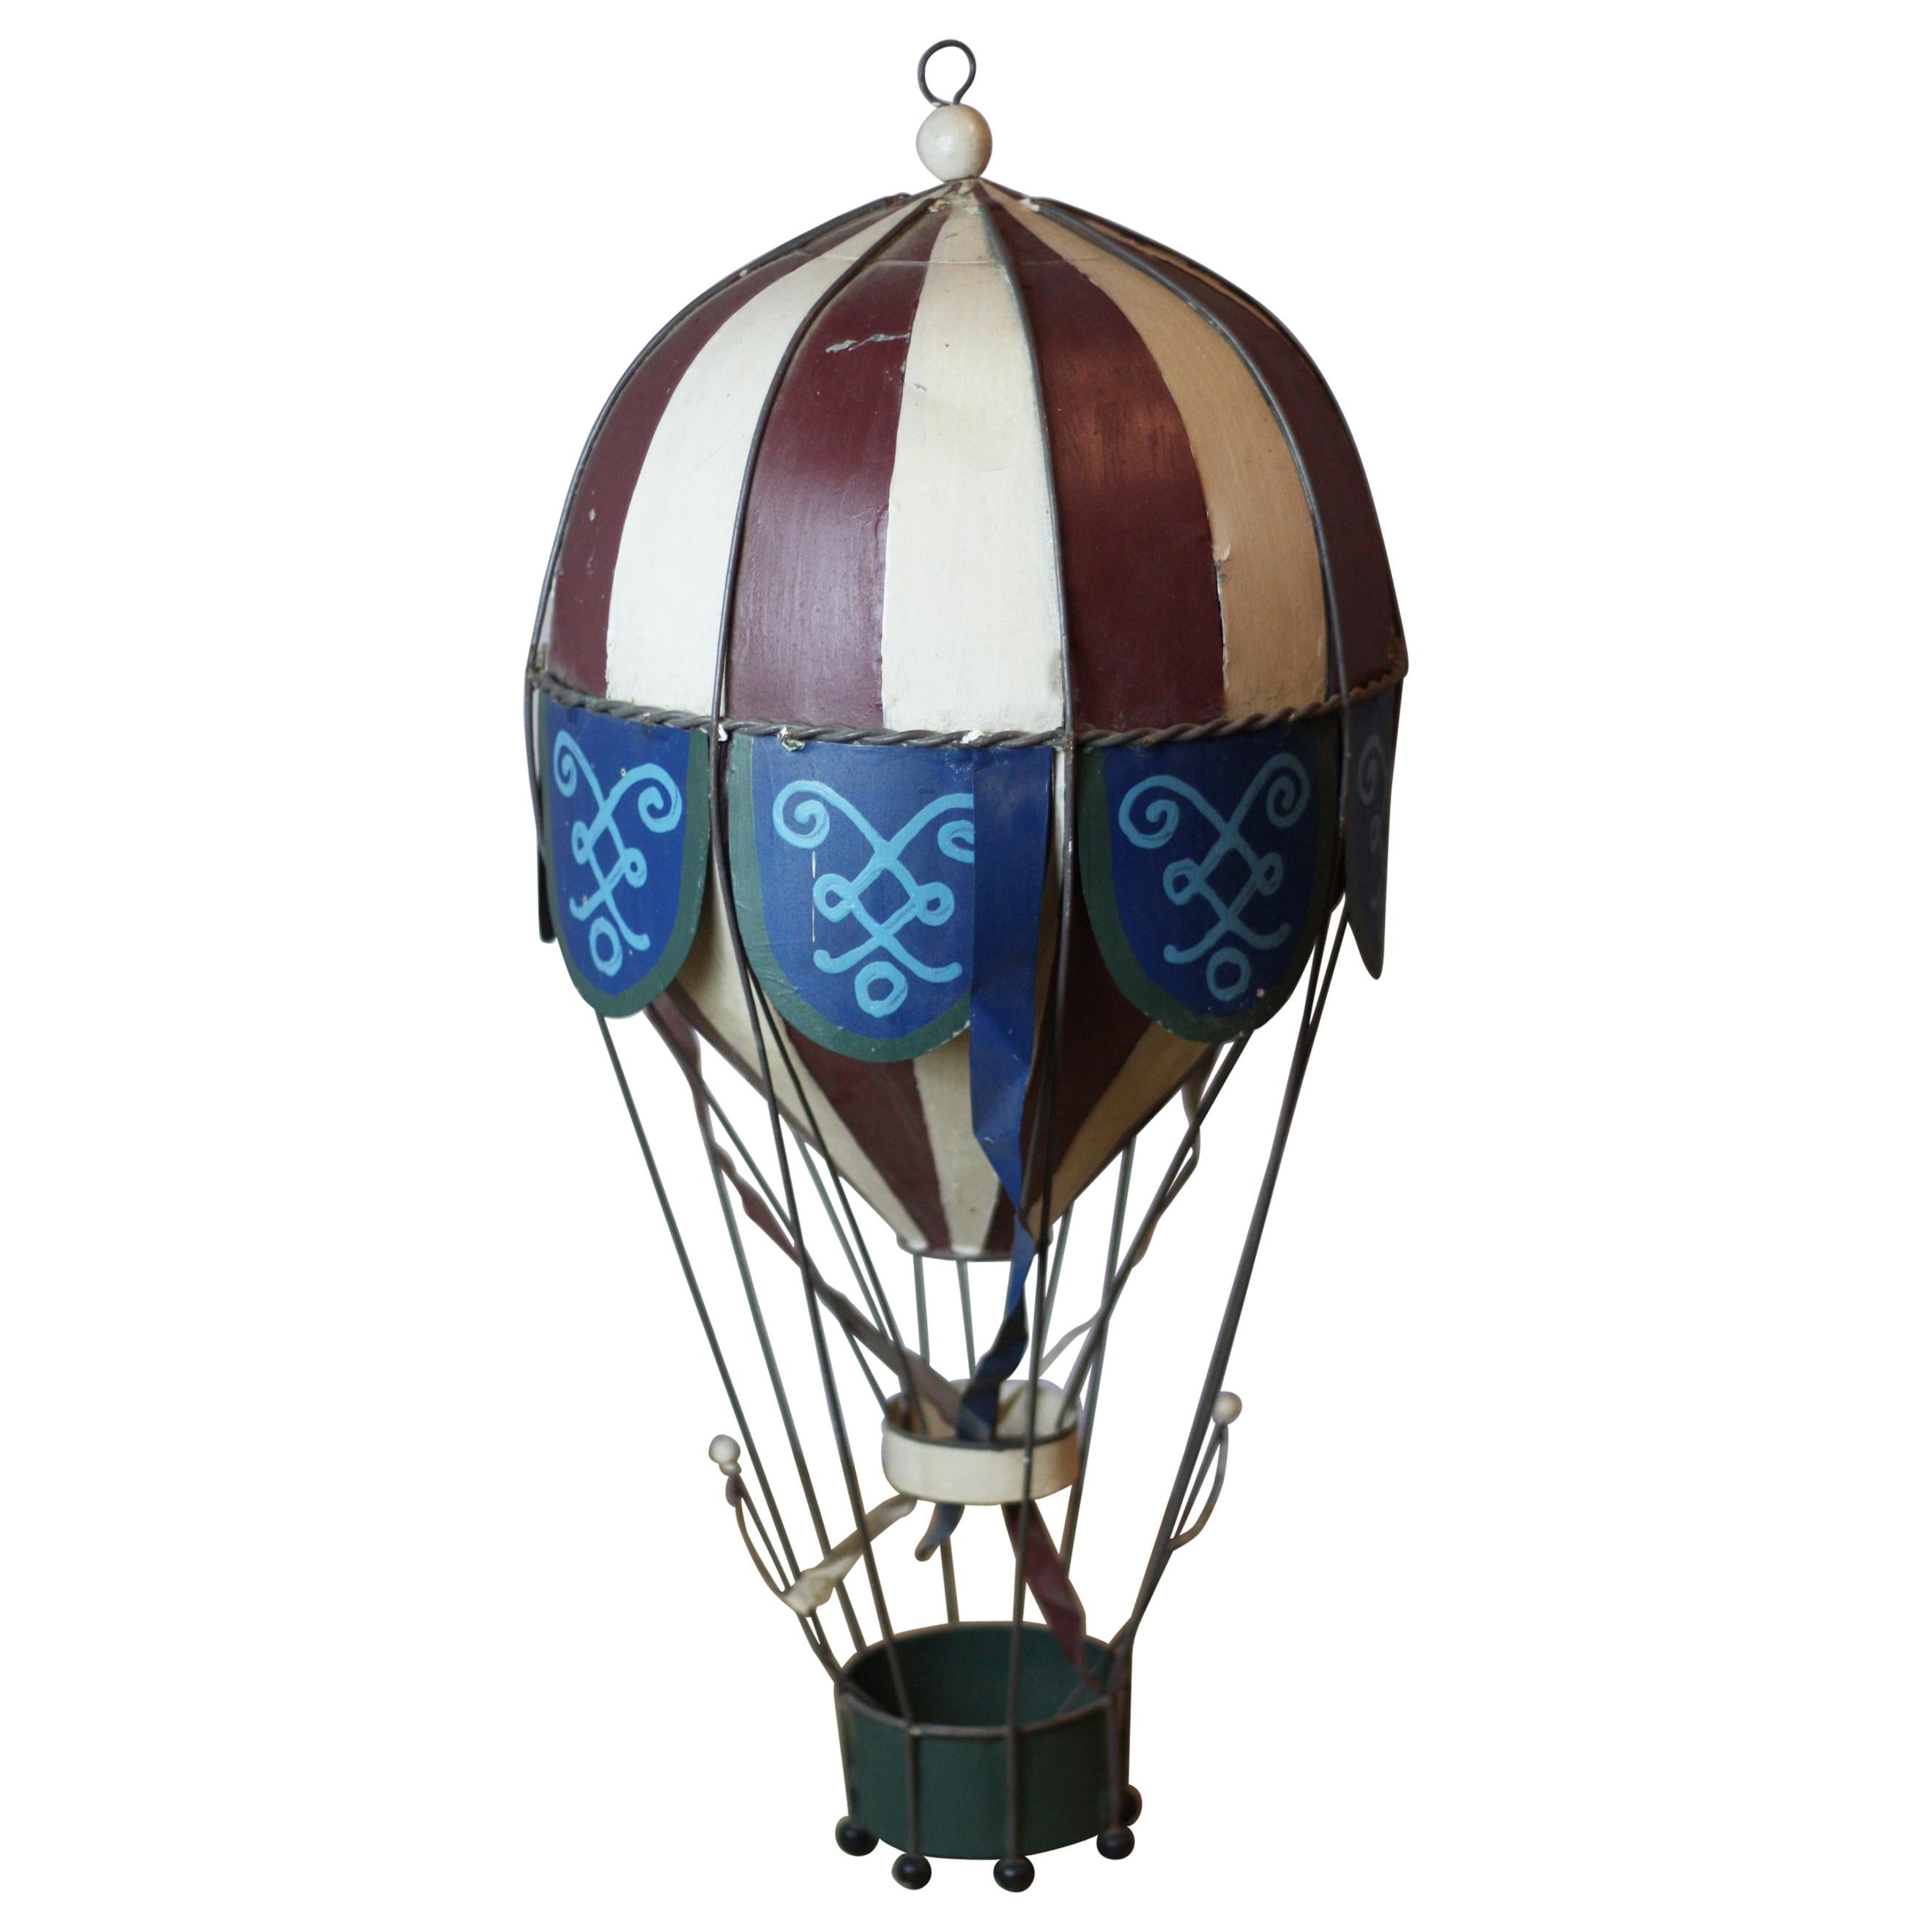 Tin Hot Air Balloon Model